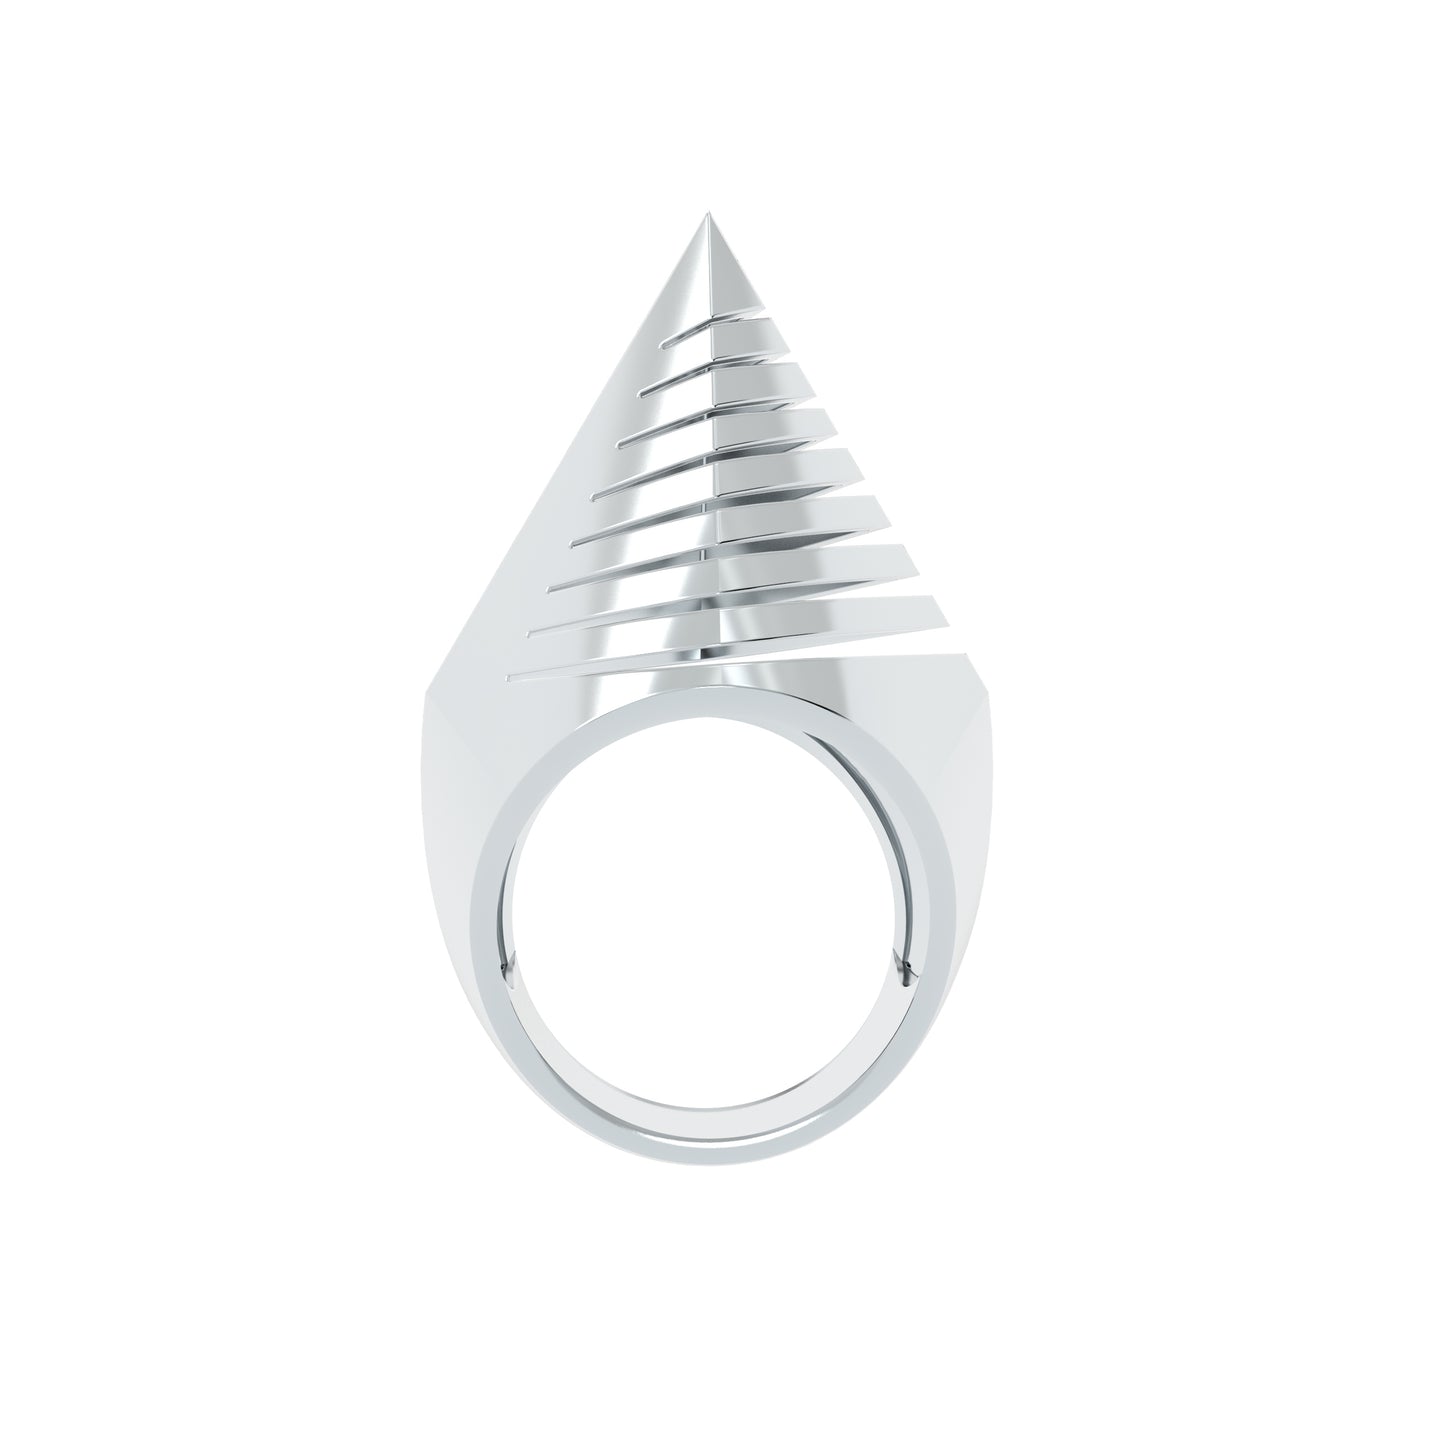 Apex Geometric Pyramid Sterling Silver Ring